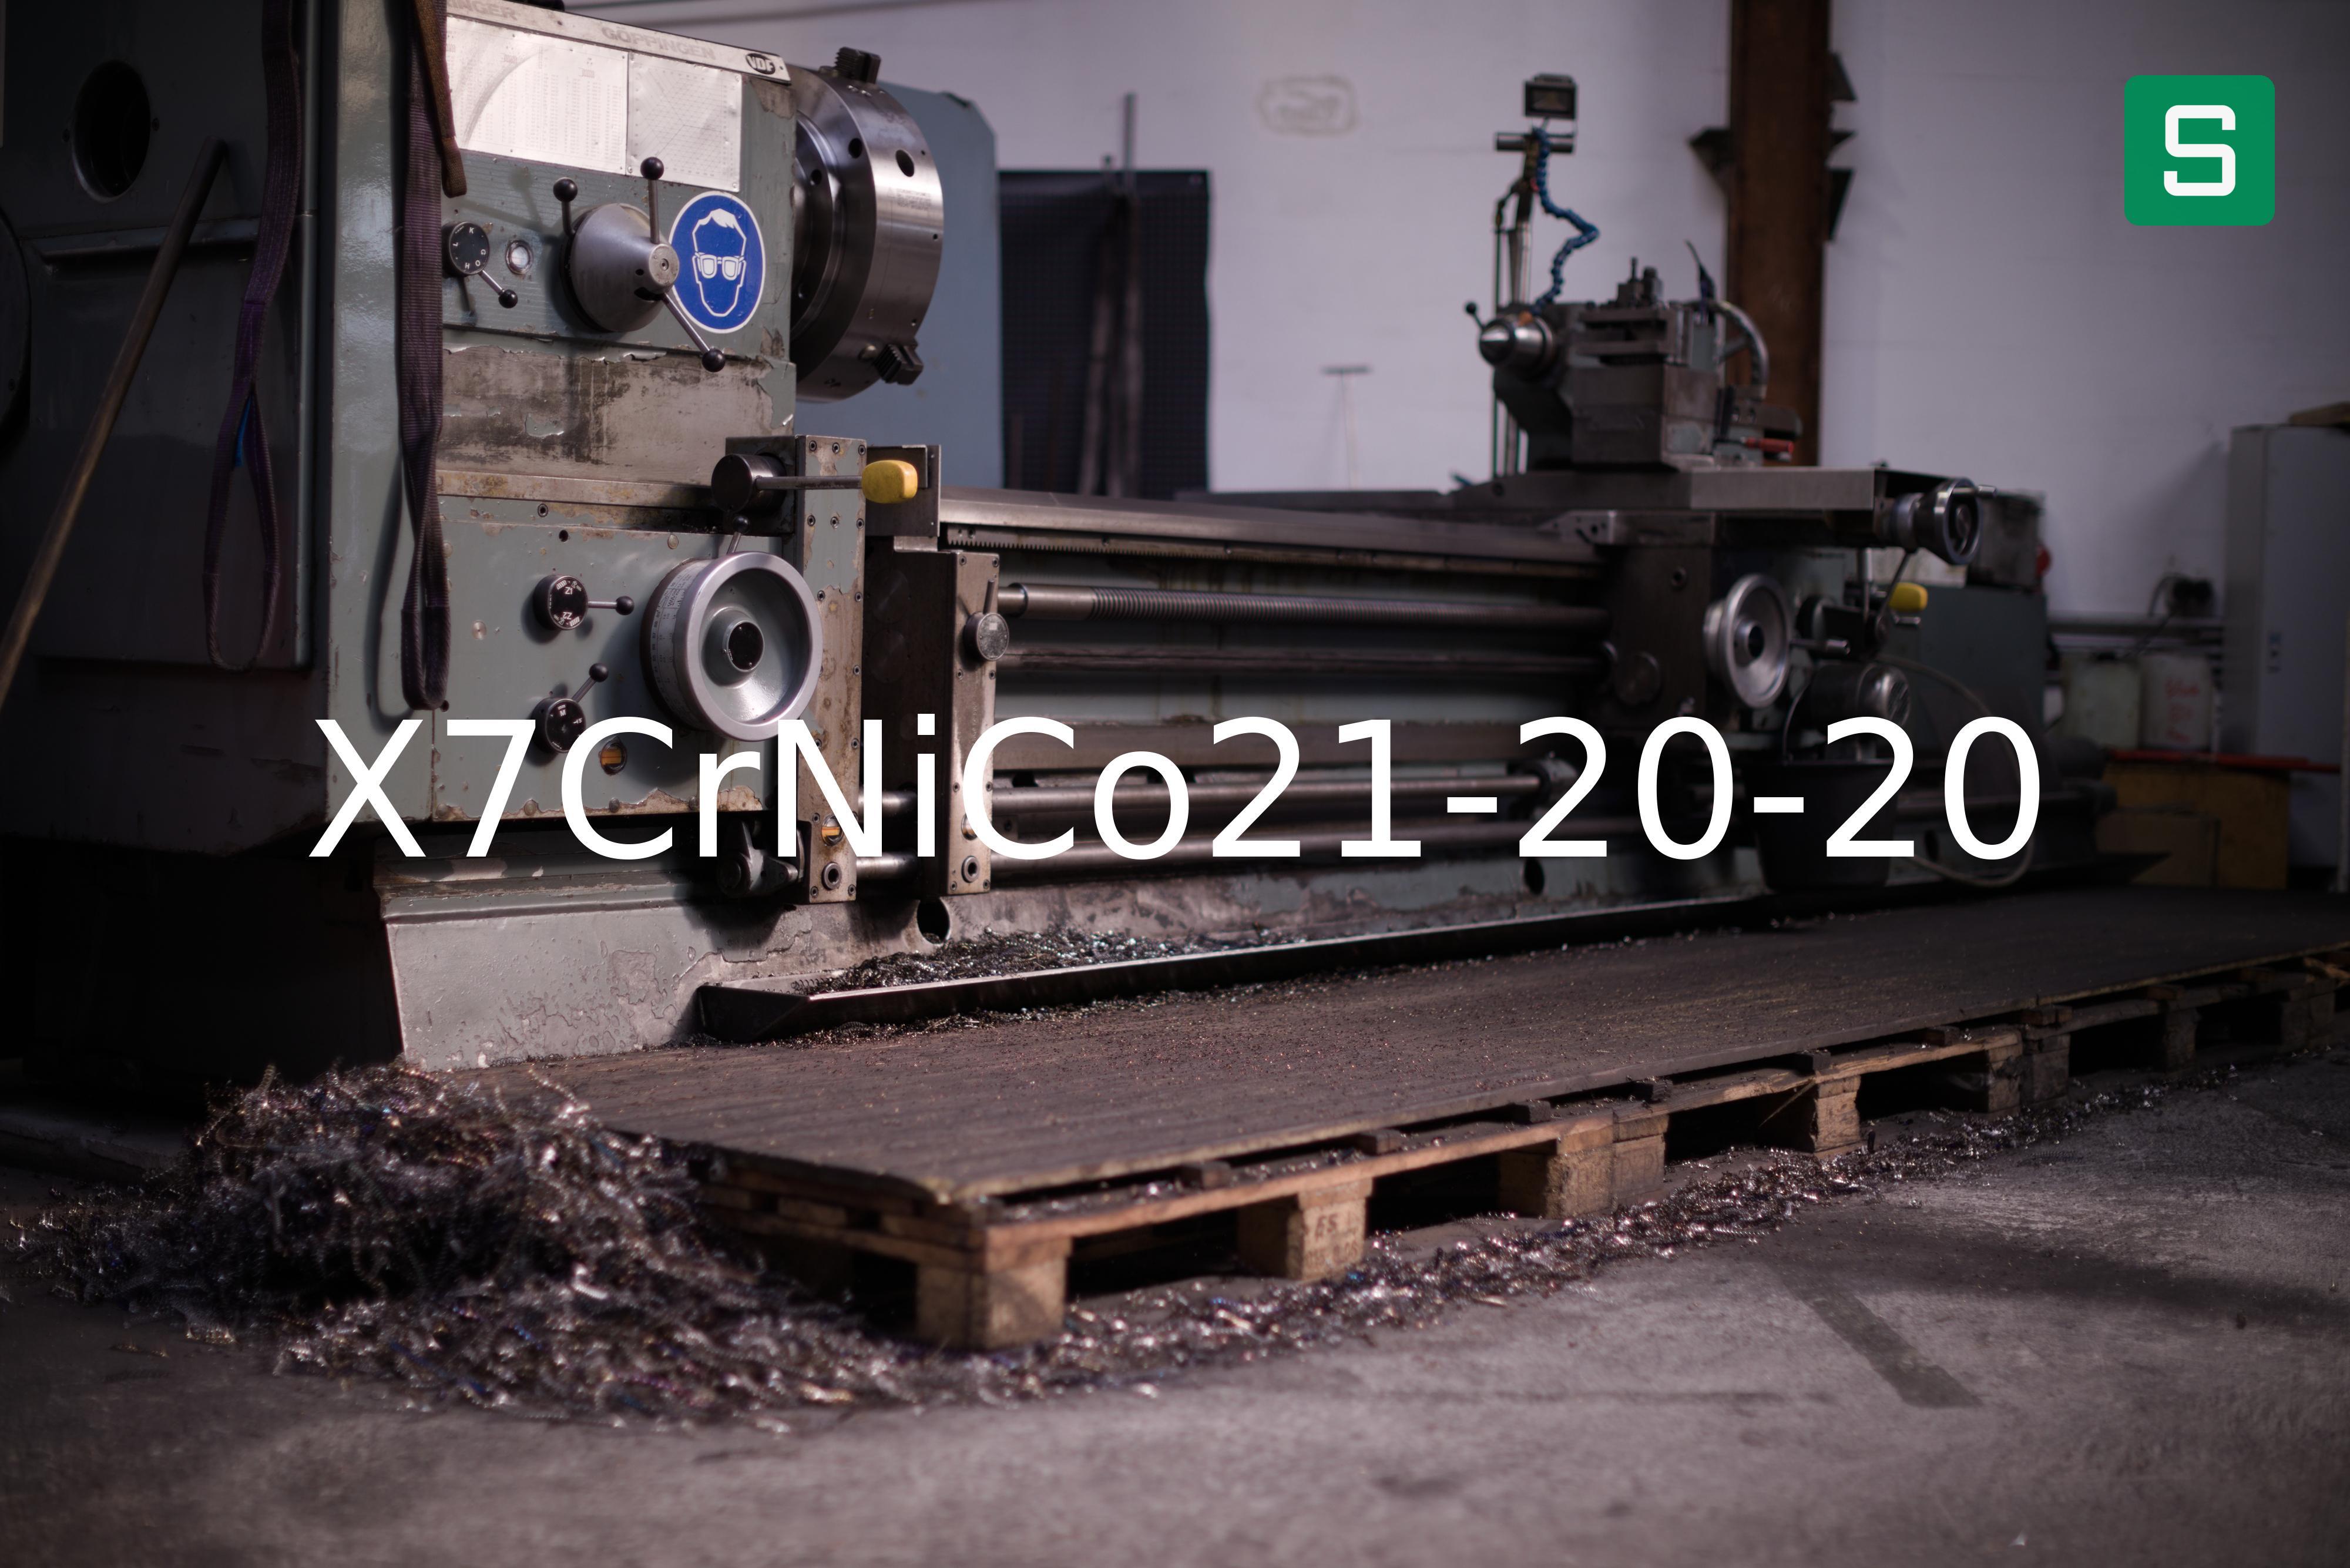 Material de Acero: X7CrNiCo21-20-20